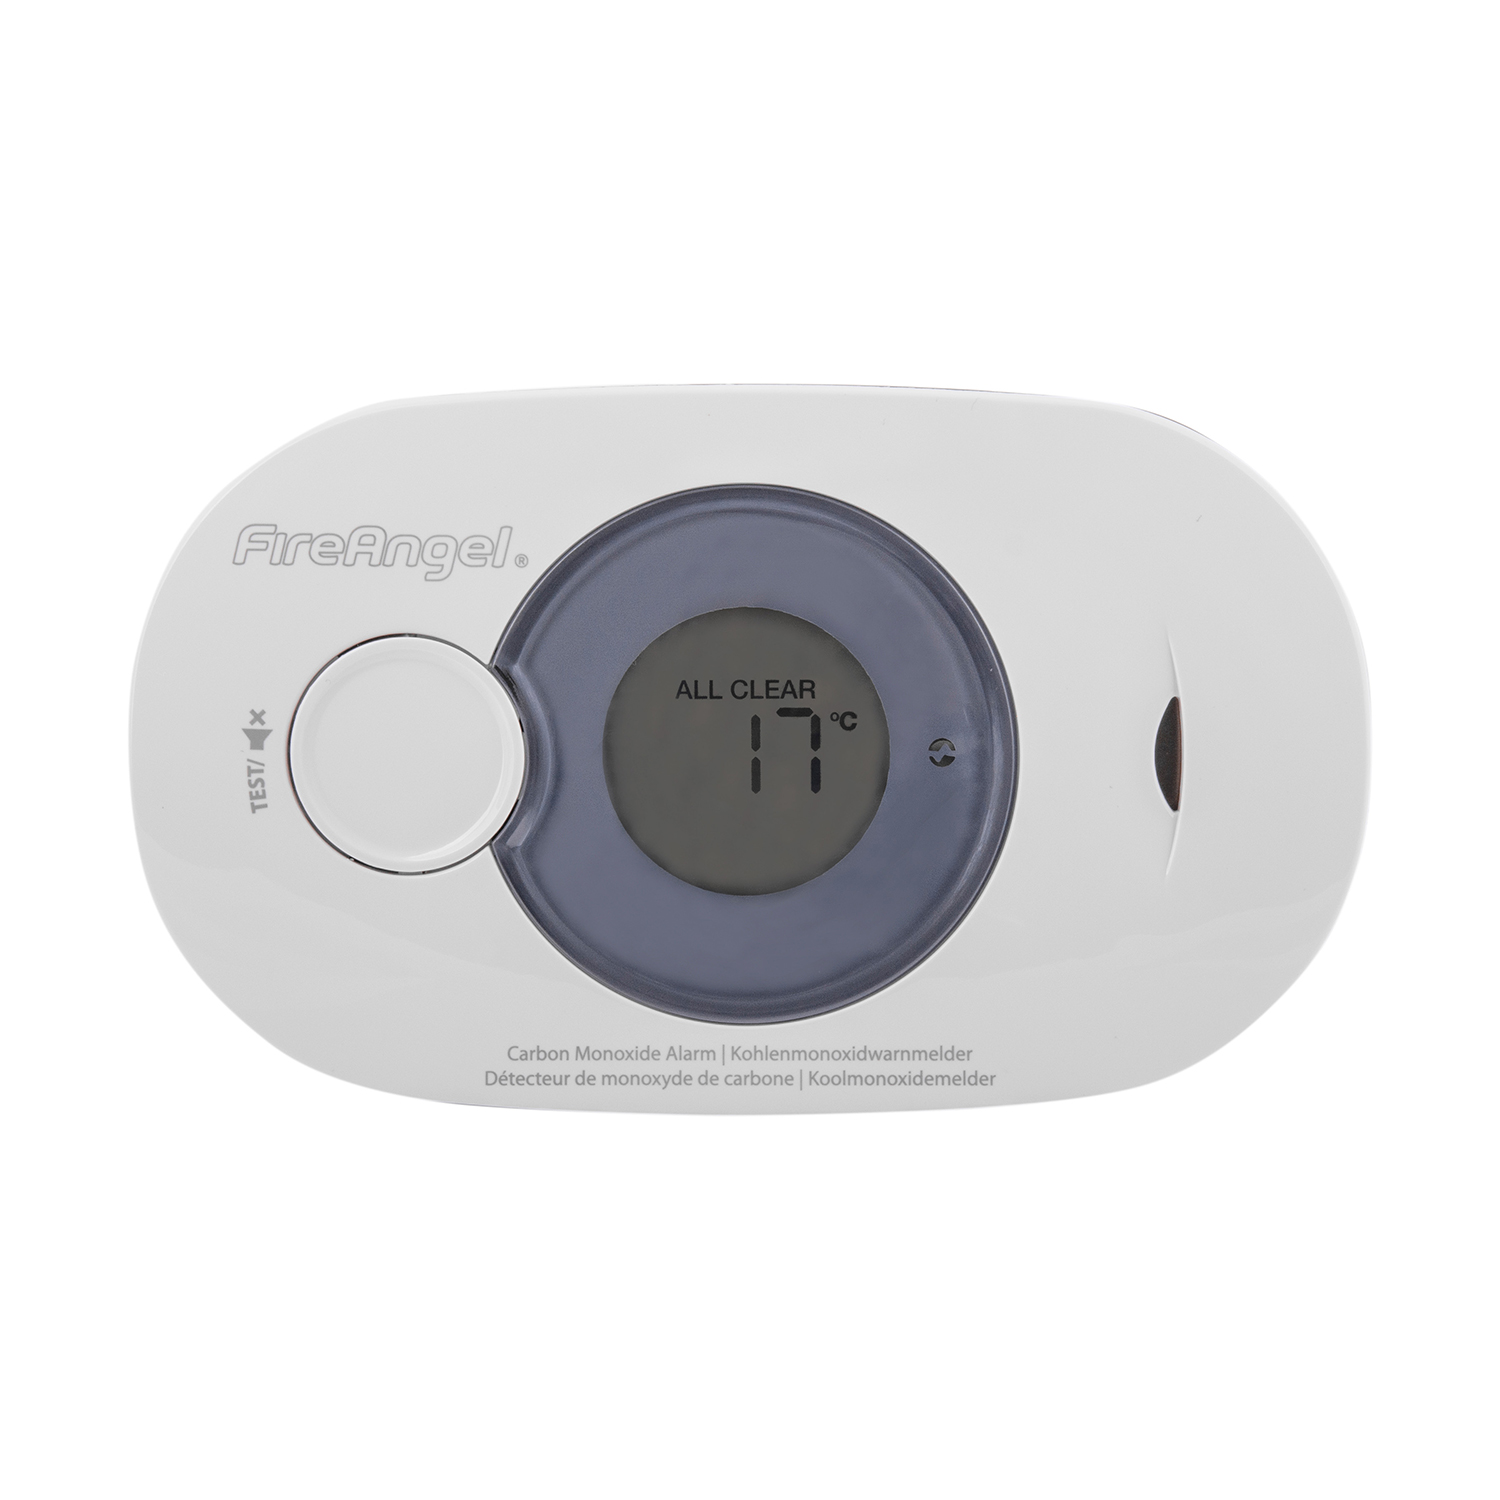 Image of the 10 Year Carbon Monoxide Alarm